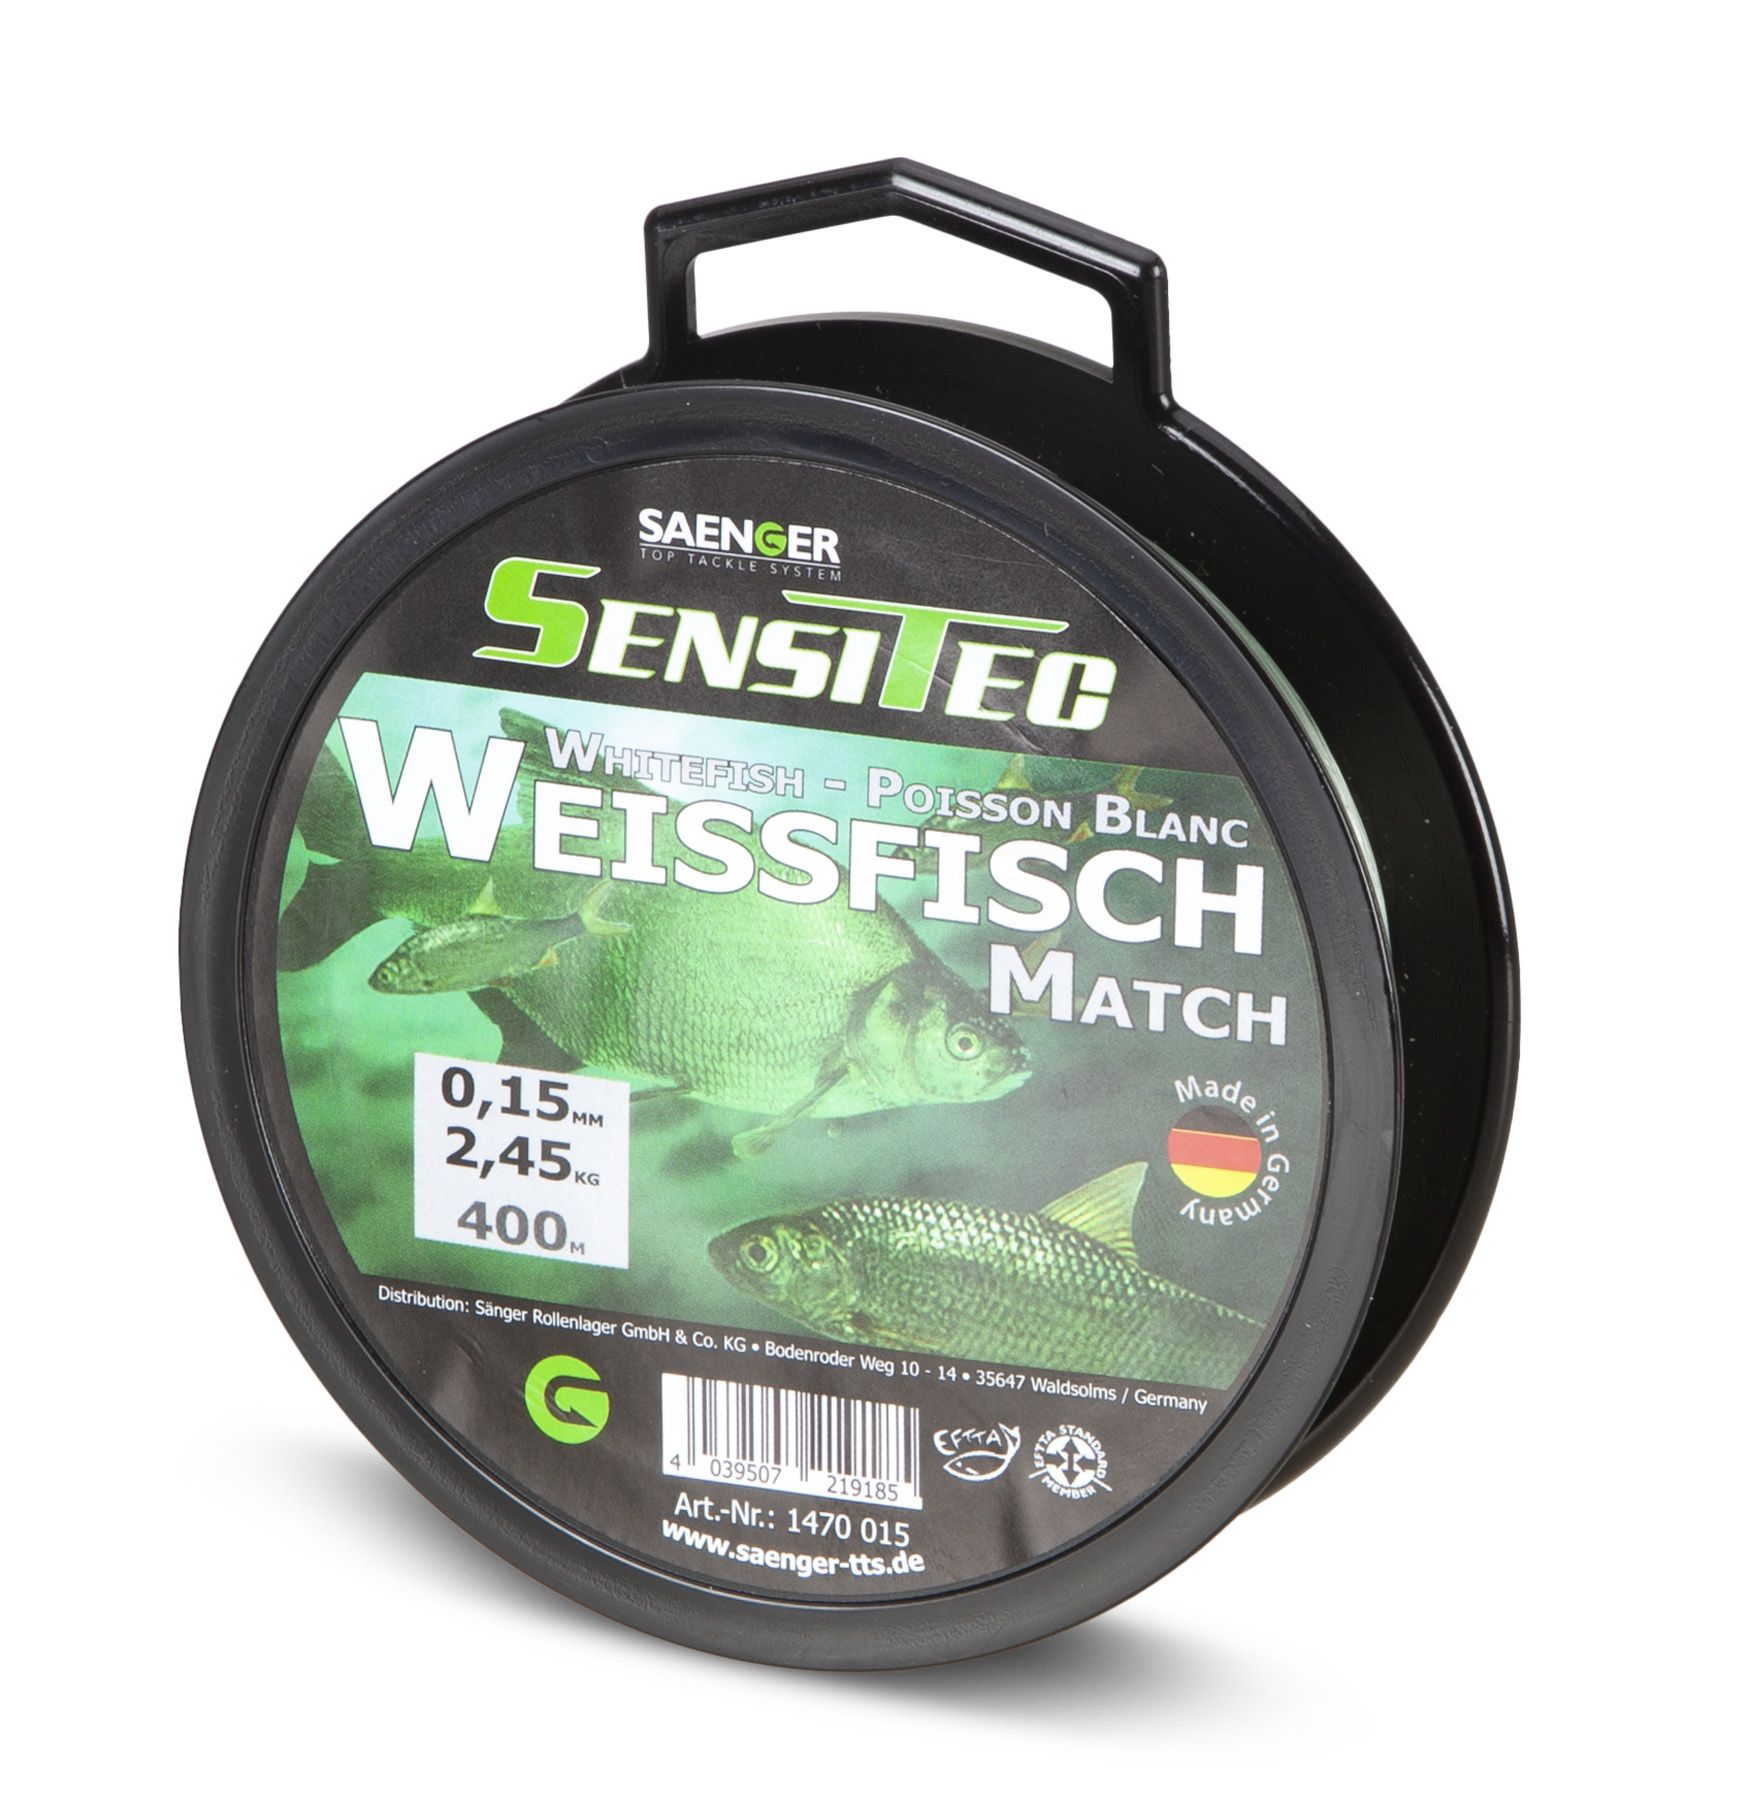 Sensitec Match Weißf. limpid green400m0,18mm